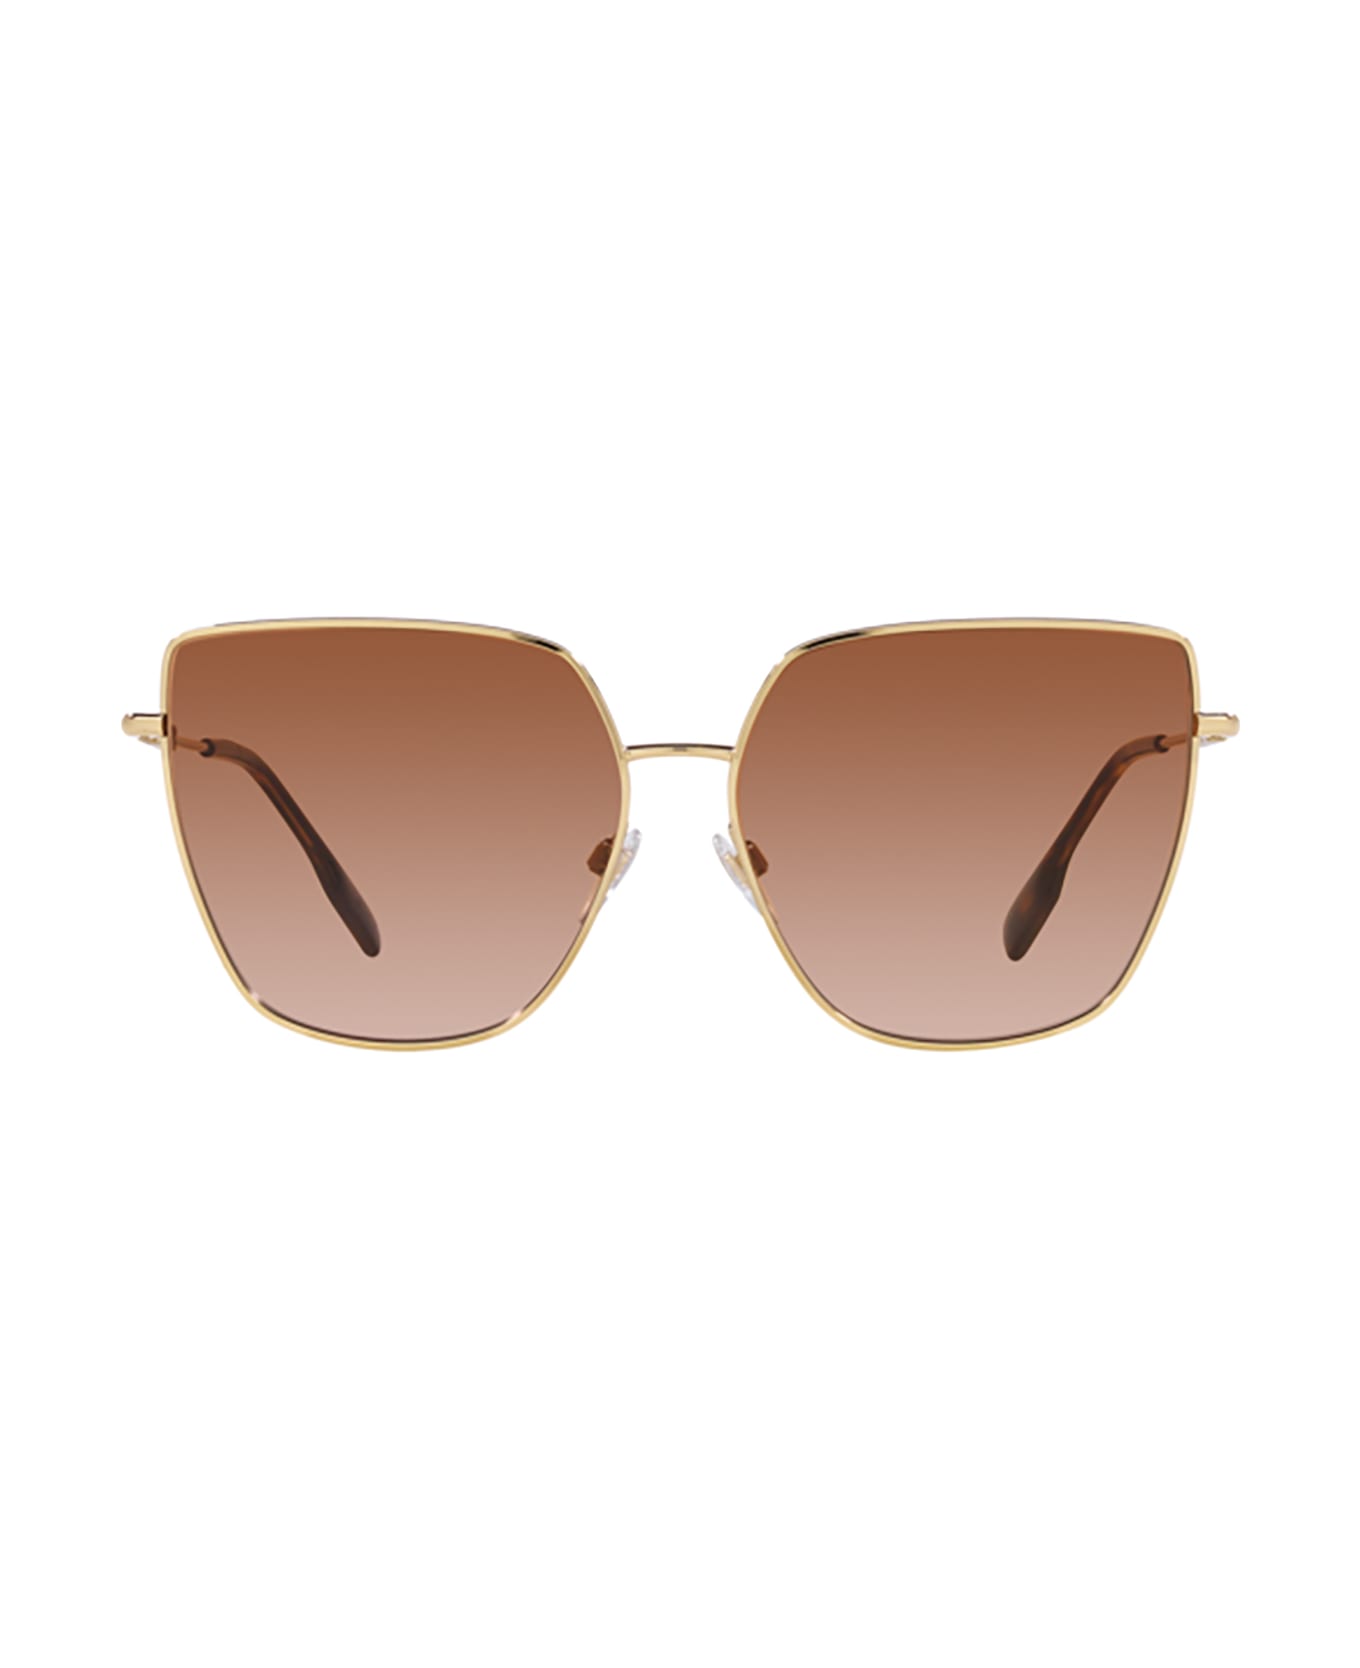 Burberry Eyewear Be3143 Light Gold Sunglasses - Light Gold